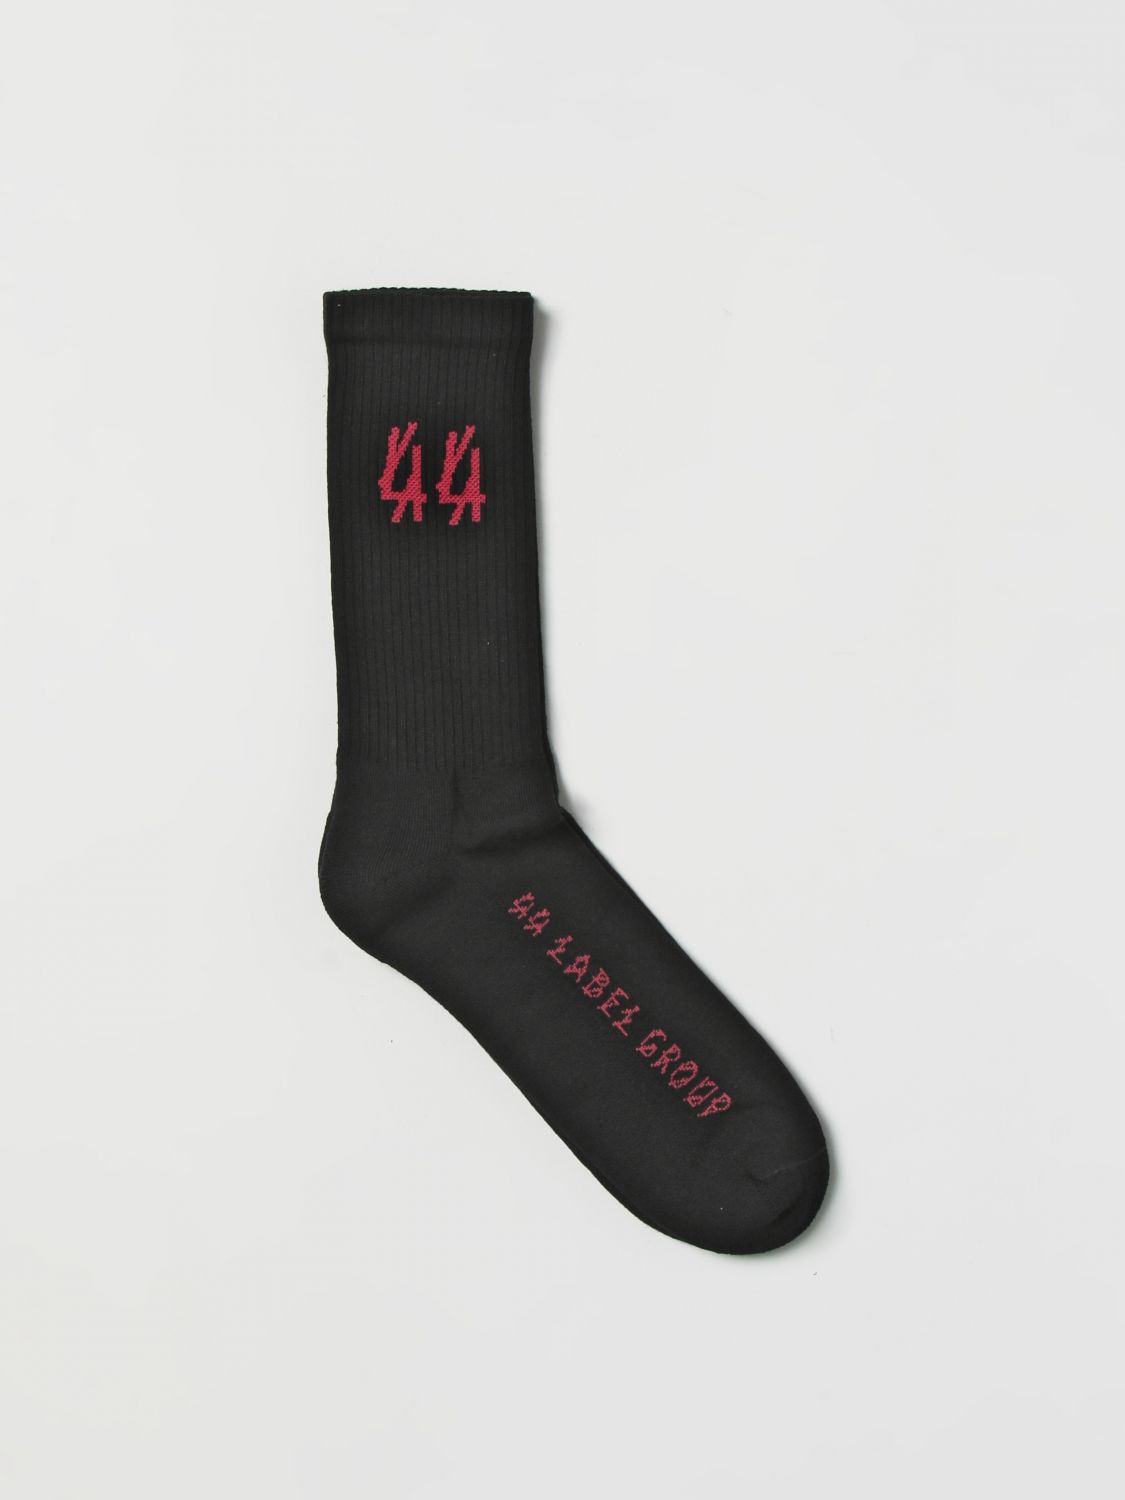 44 Label Group Socken  Herren Farbe Schwarz In Black